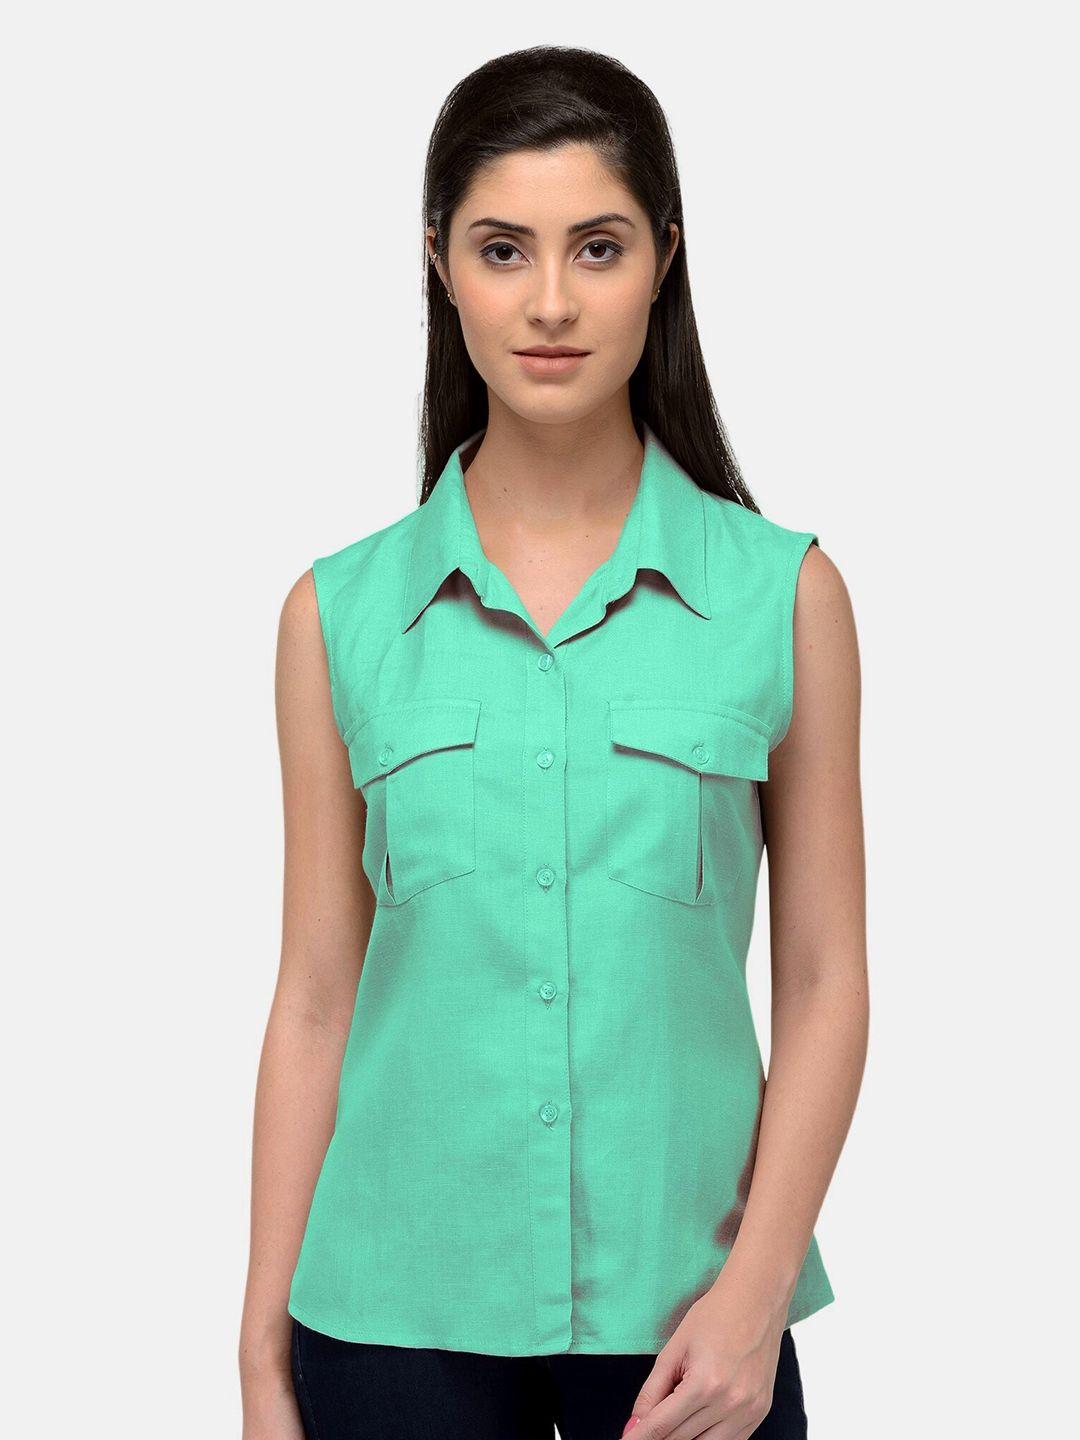 patrorna women sea green comfort solid casual shirt